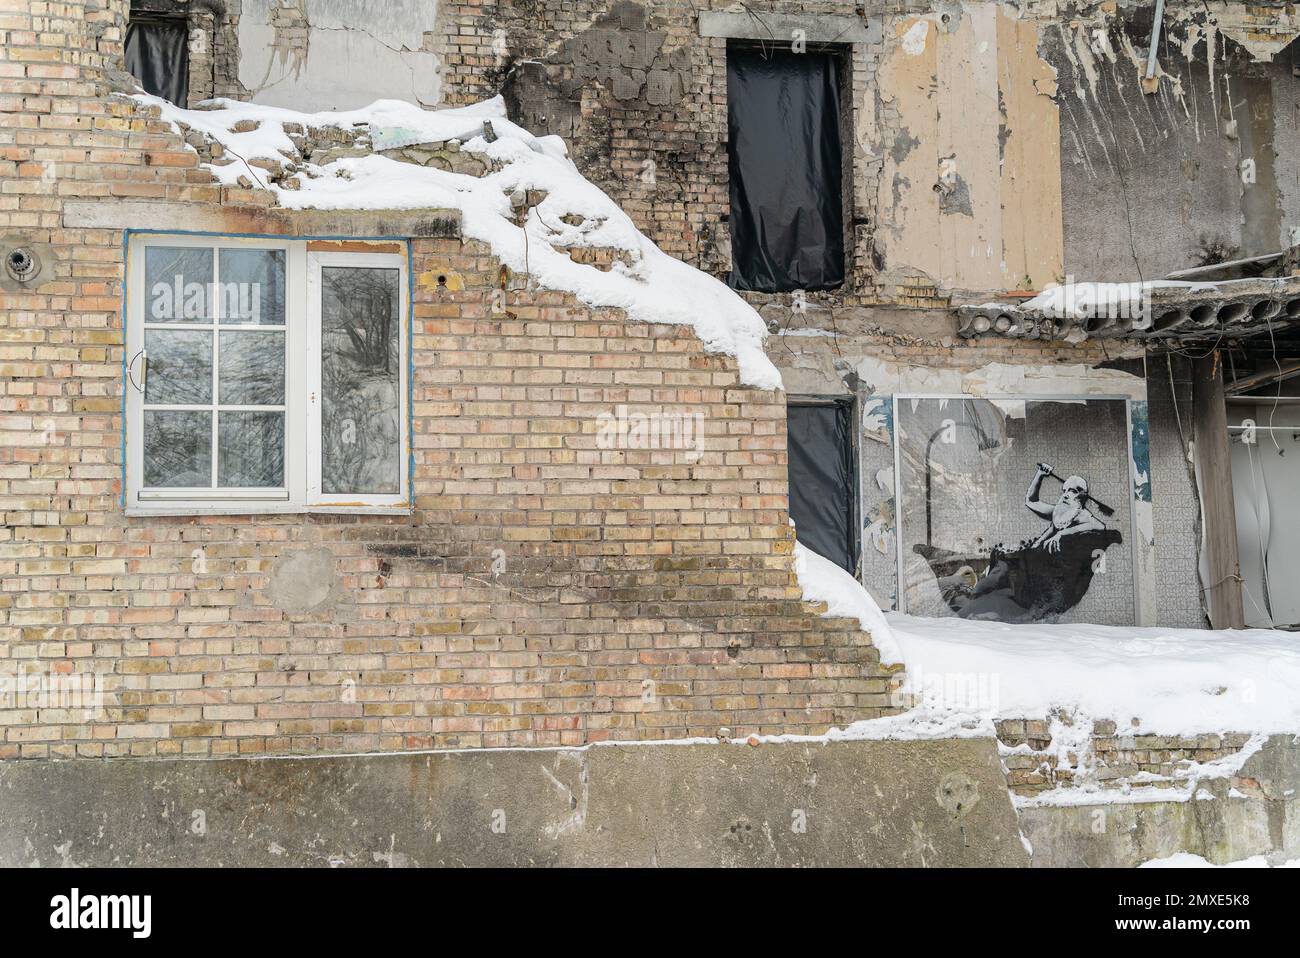 Gorenka, Ukraine - Banksy graffiti in a bombed-out house Stock Photo